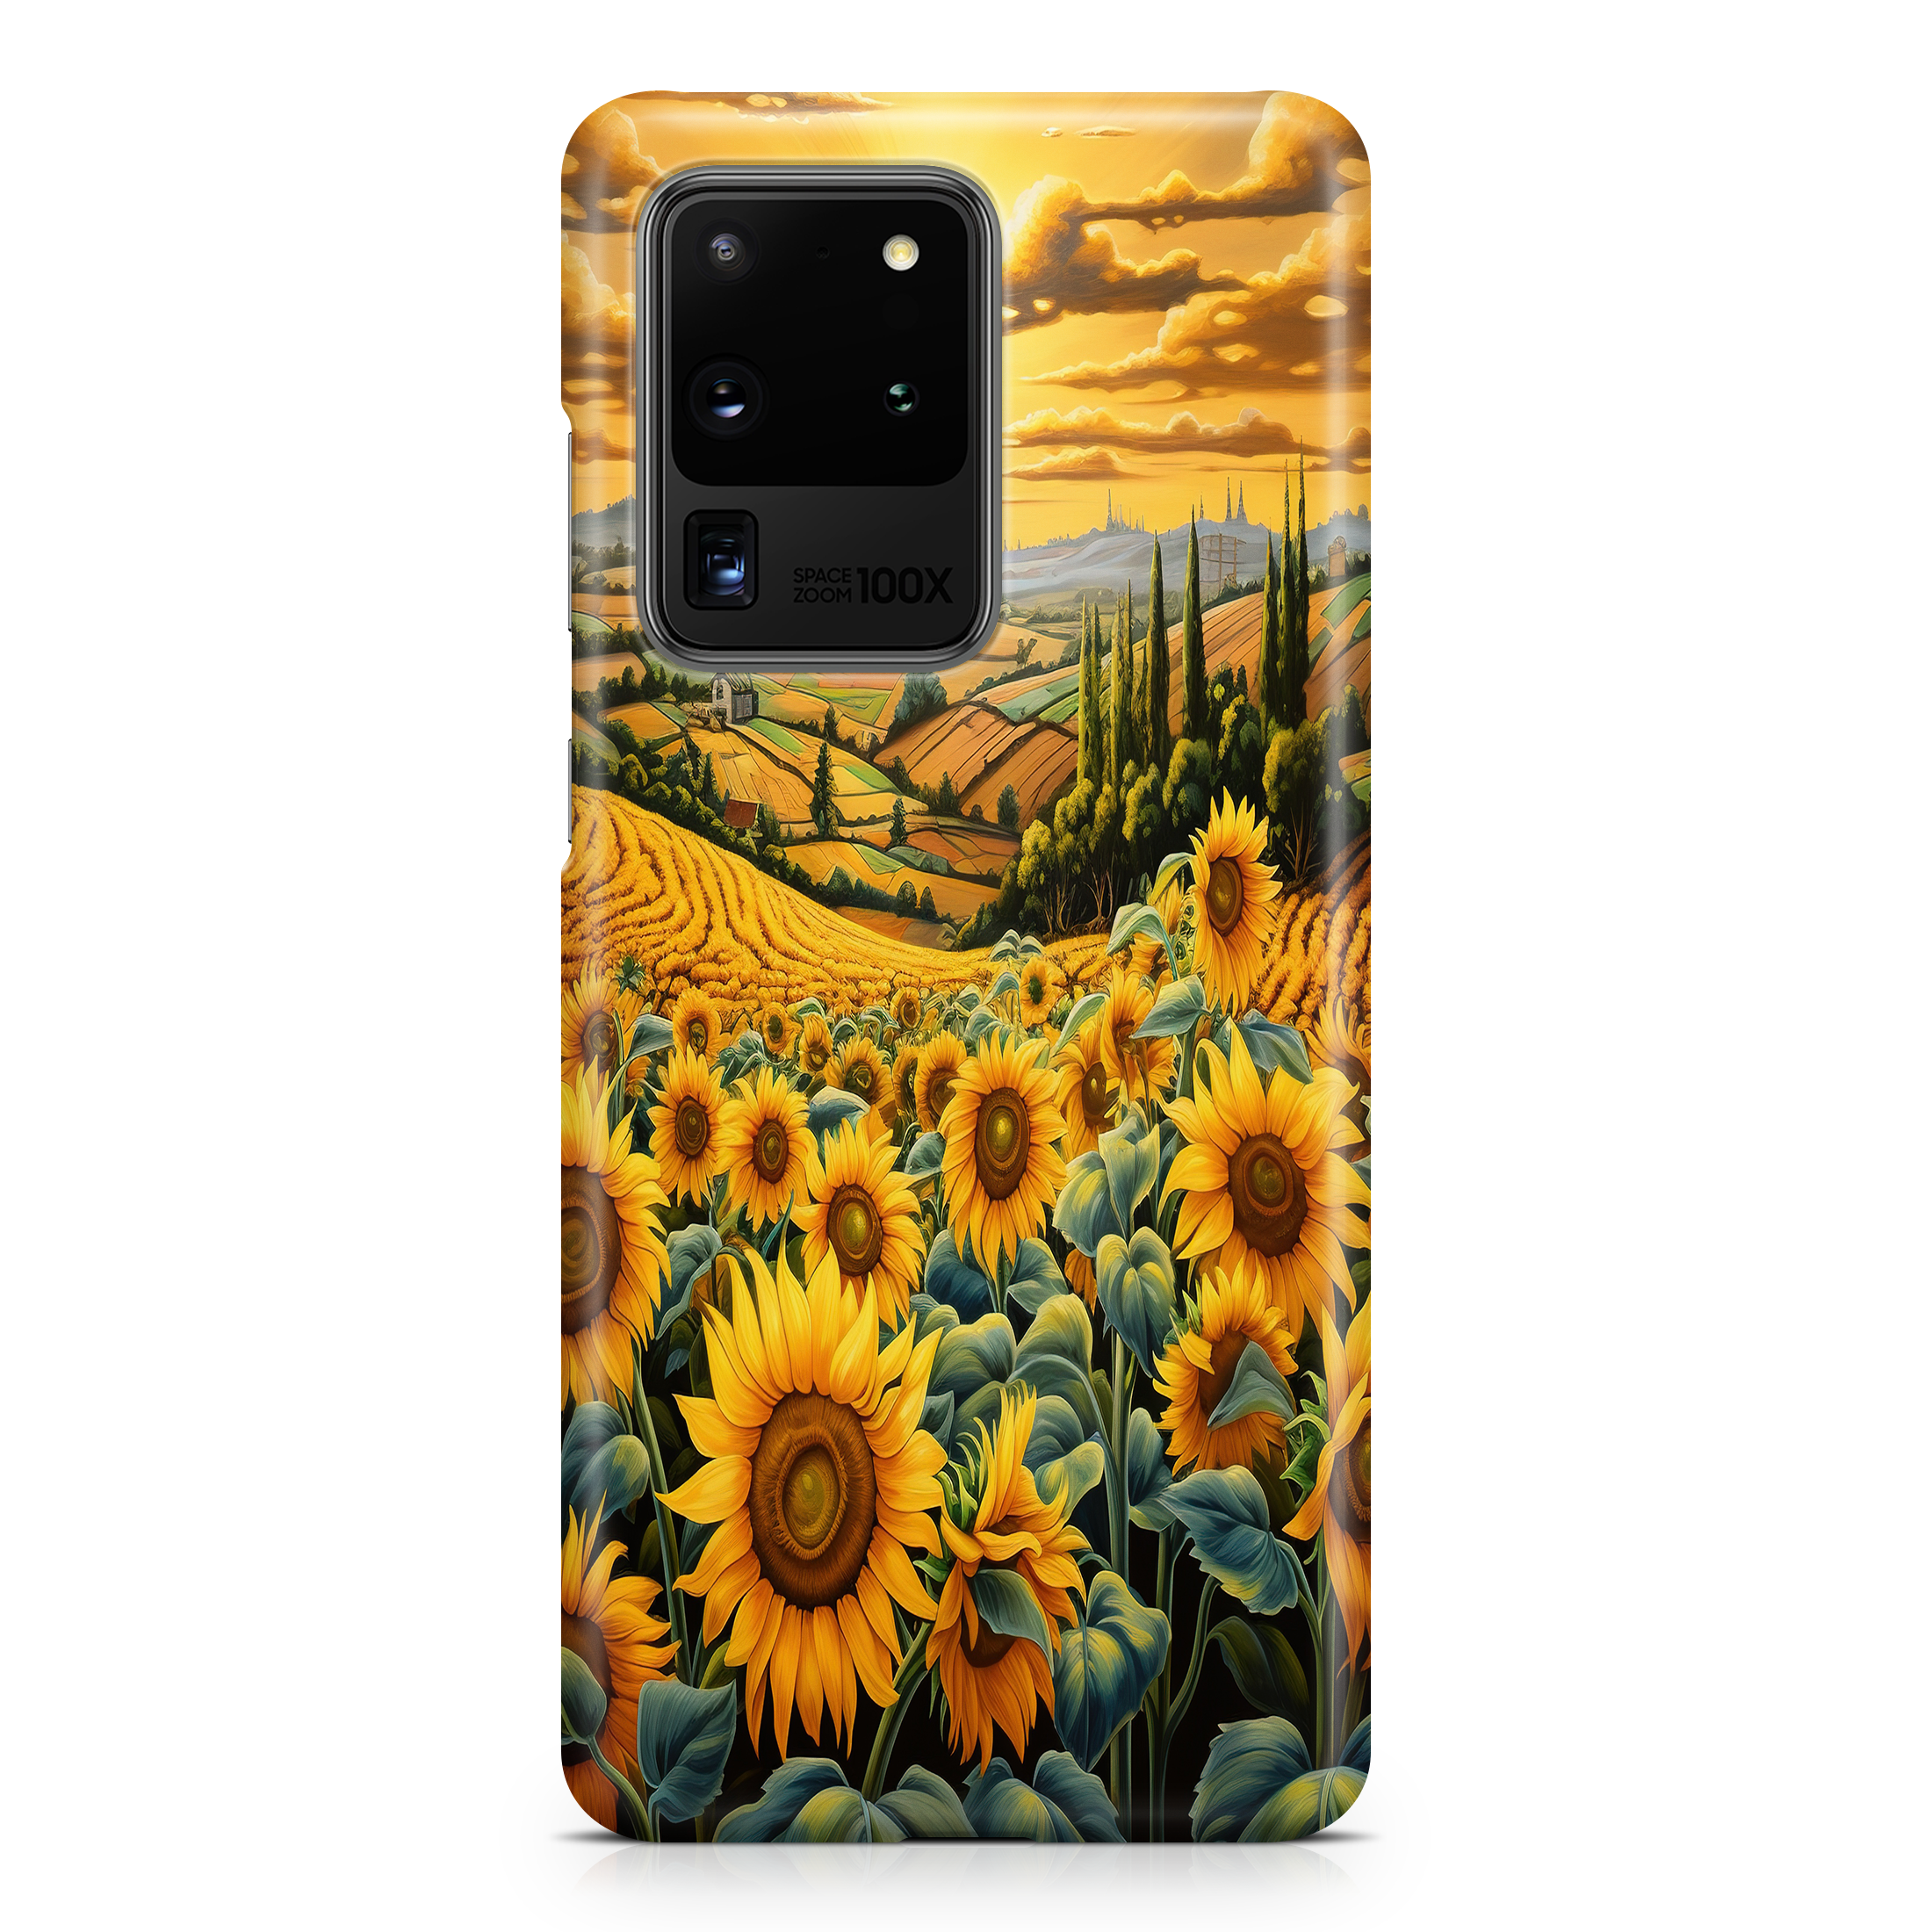 Sunflower Fields - Samsung phone case designs by CaseSwagger